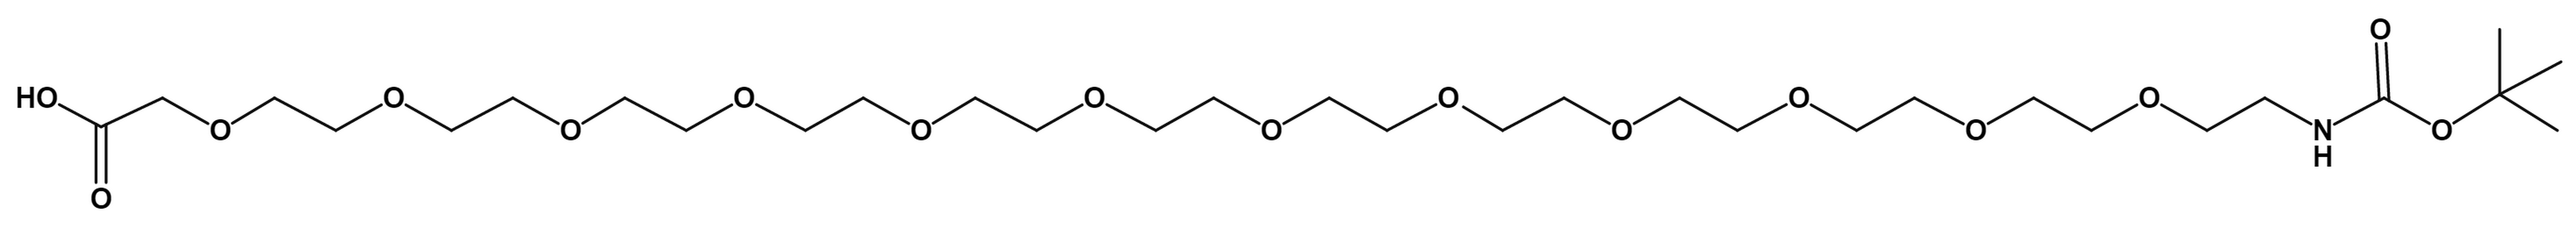 t-Boc-N-amido-PEG12-CH2COOH